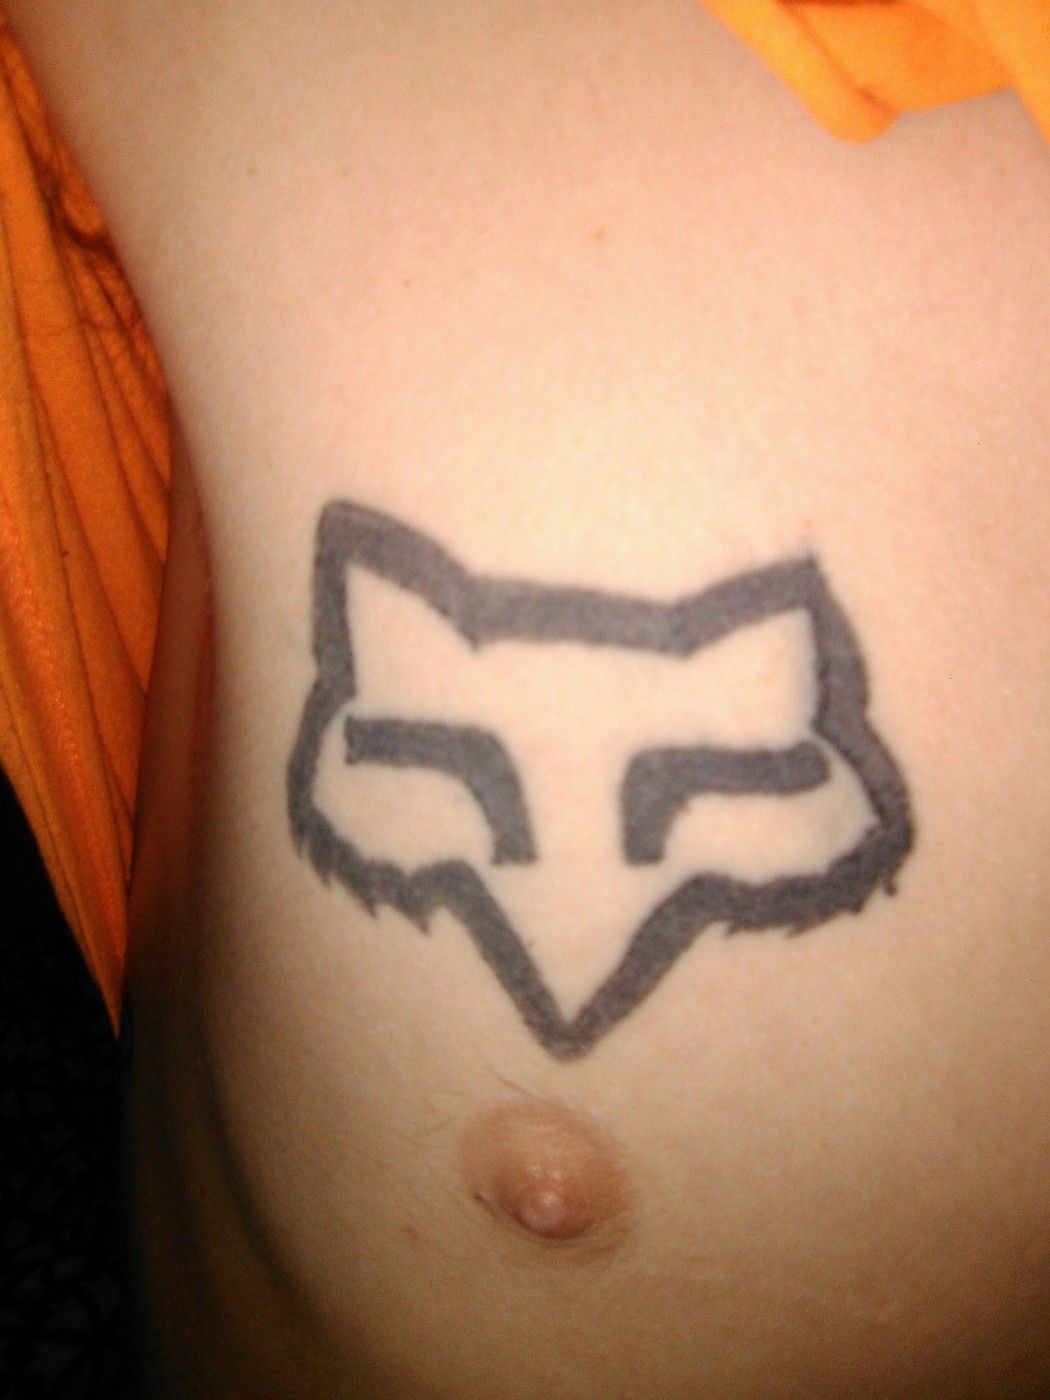 fox racing tattoo